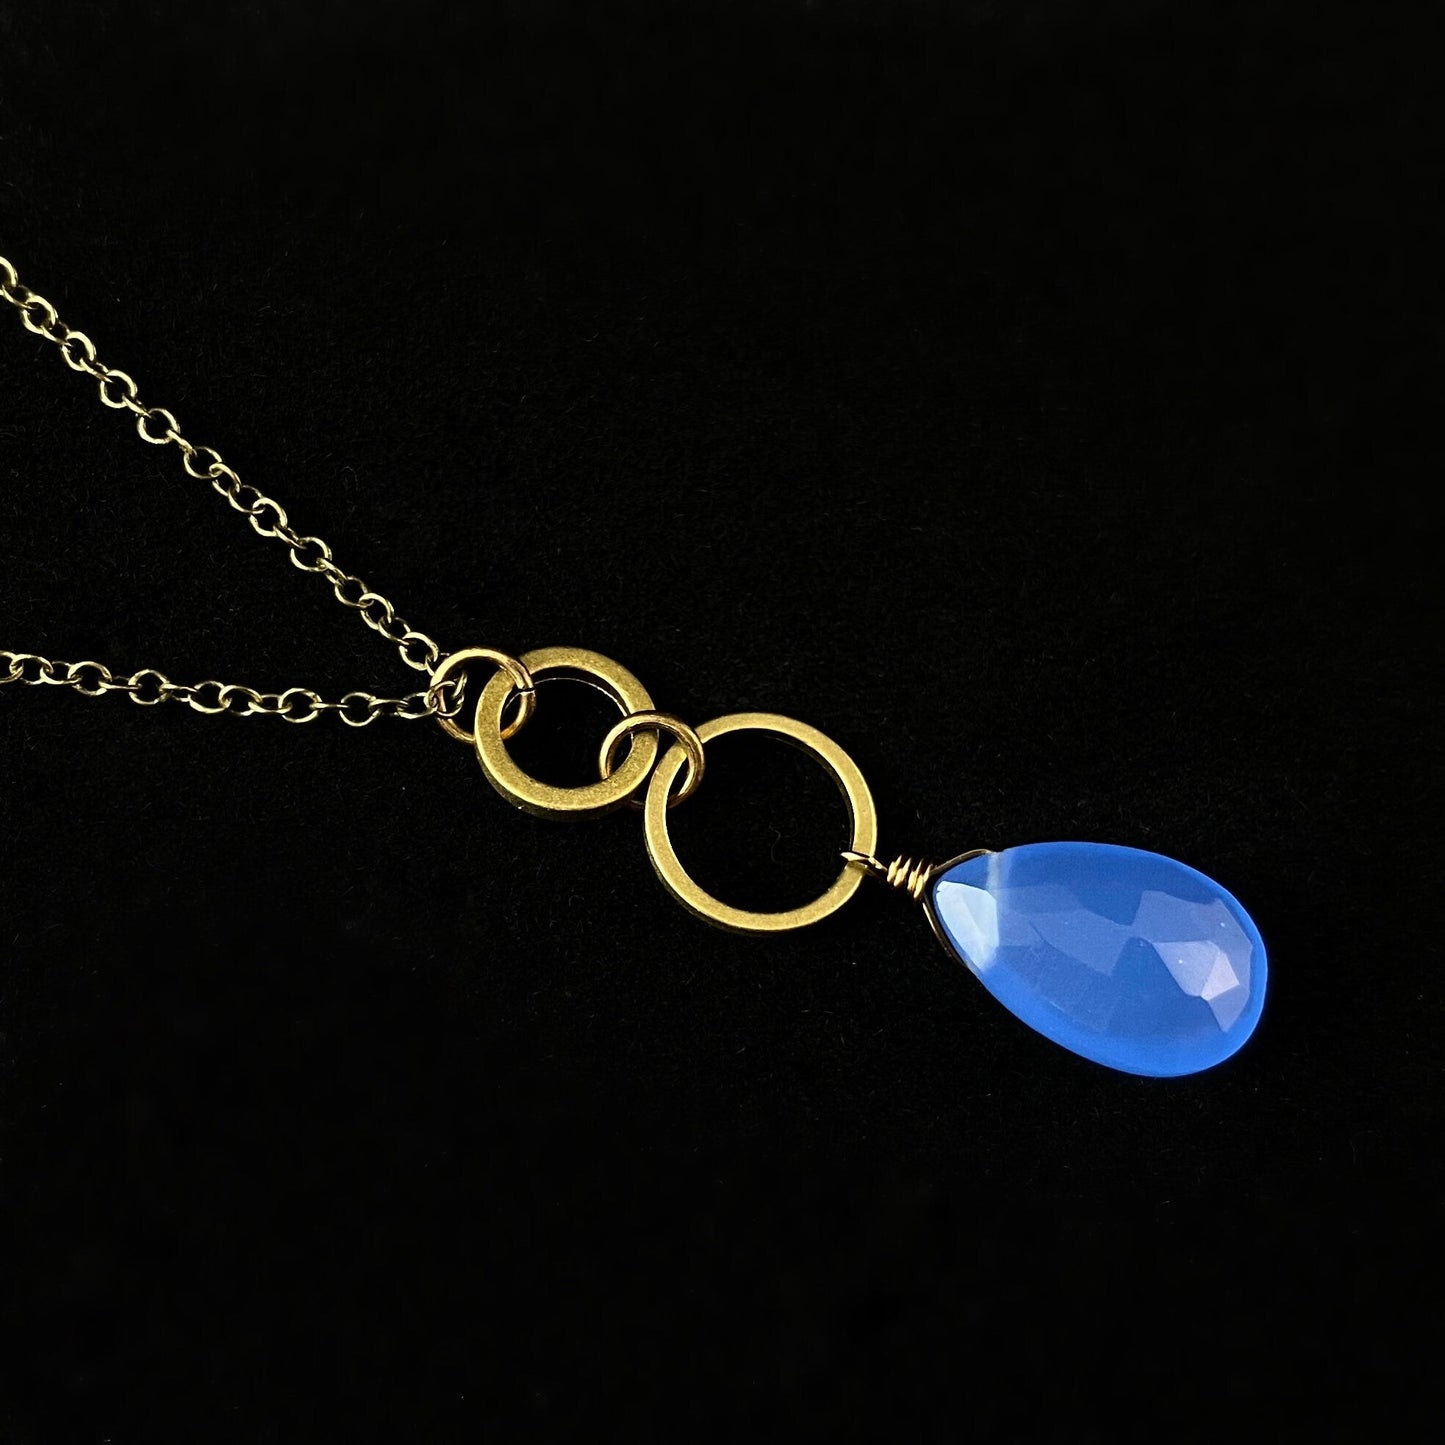 Boho Blue Chalcedony Double Circle Pendant Necklace